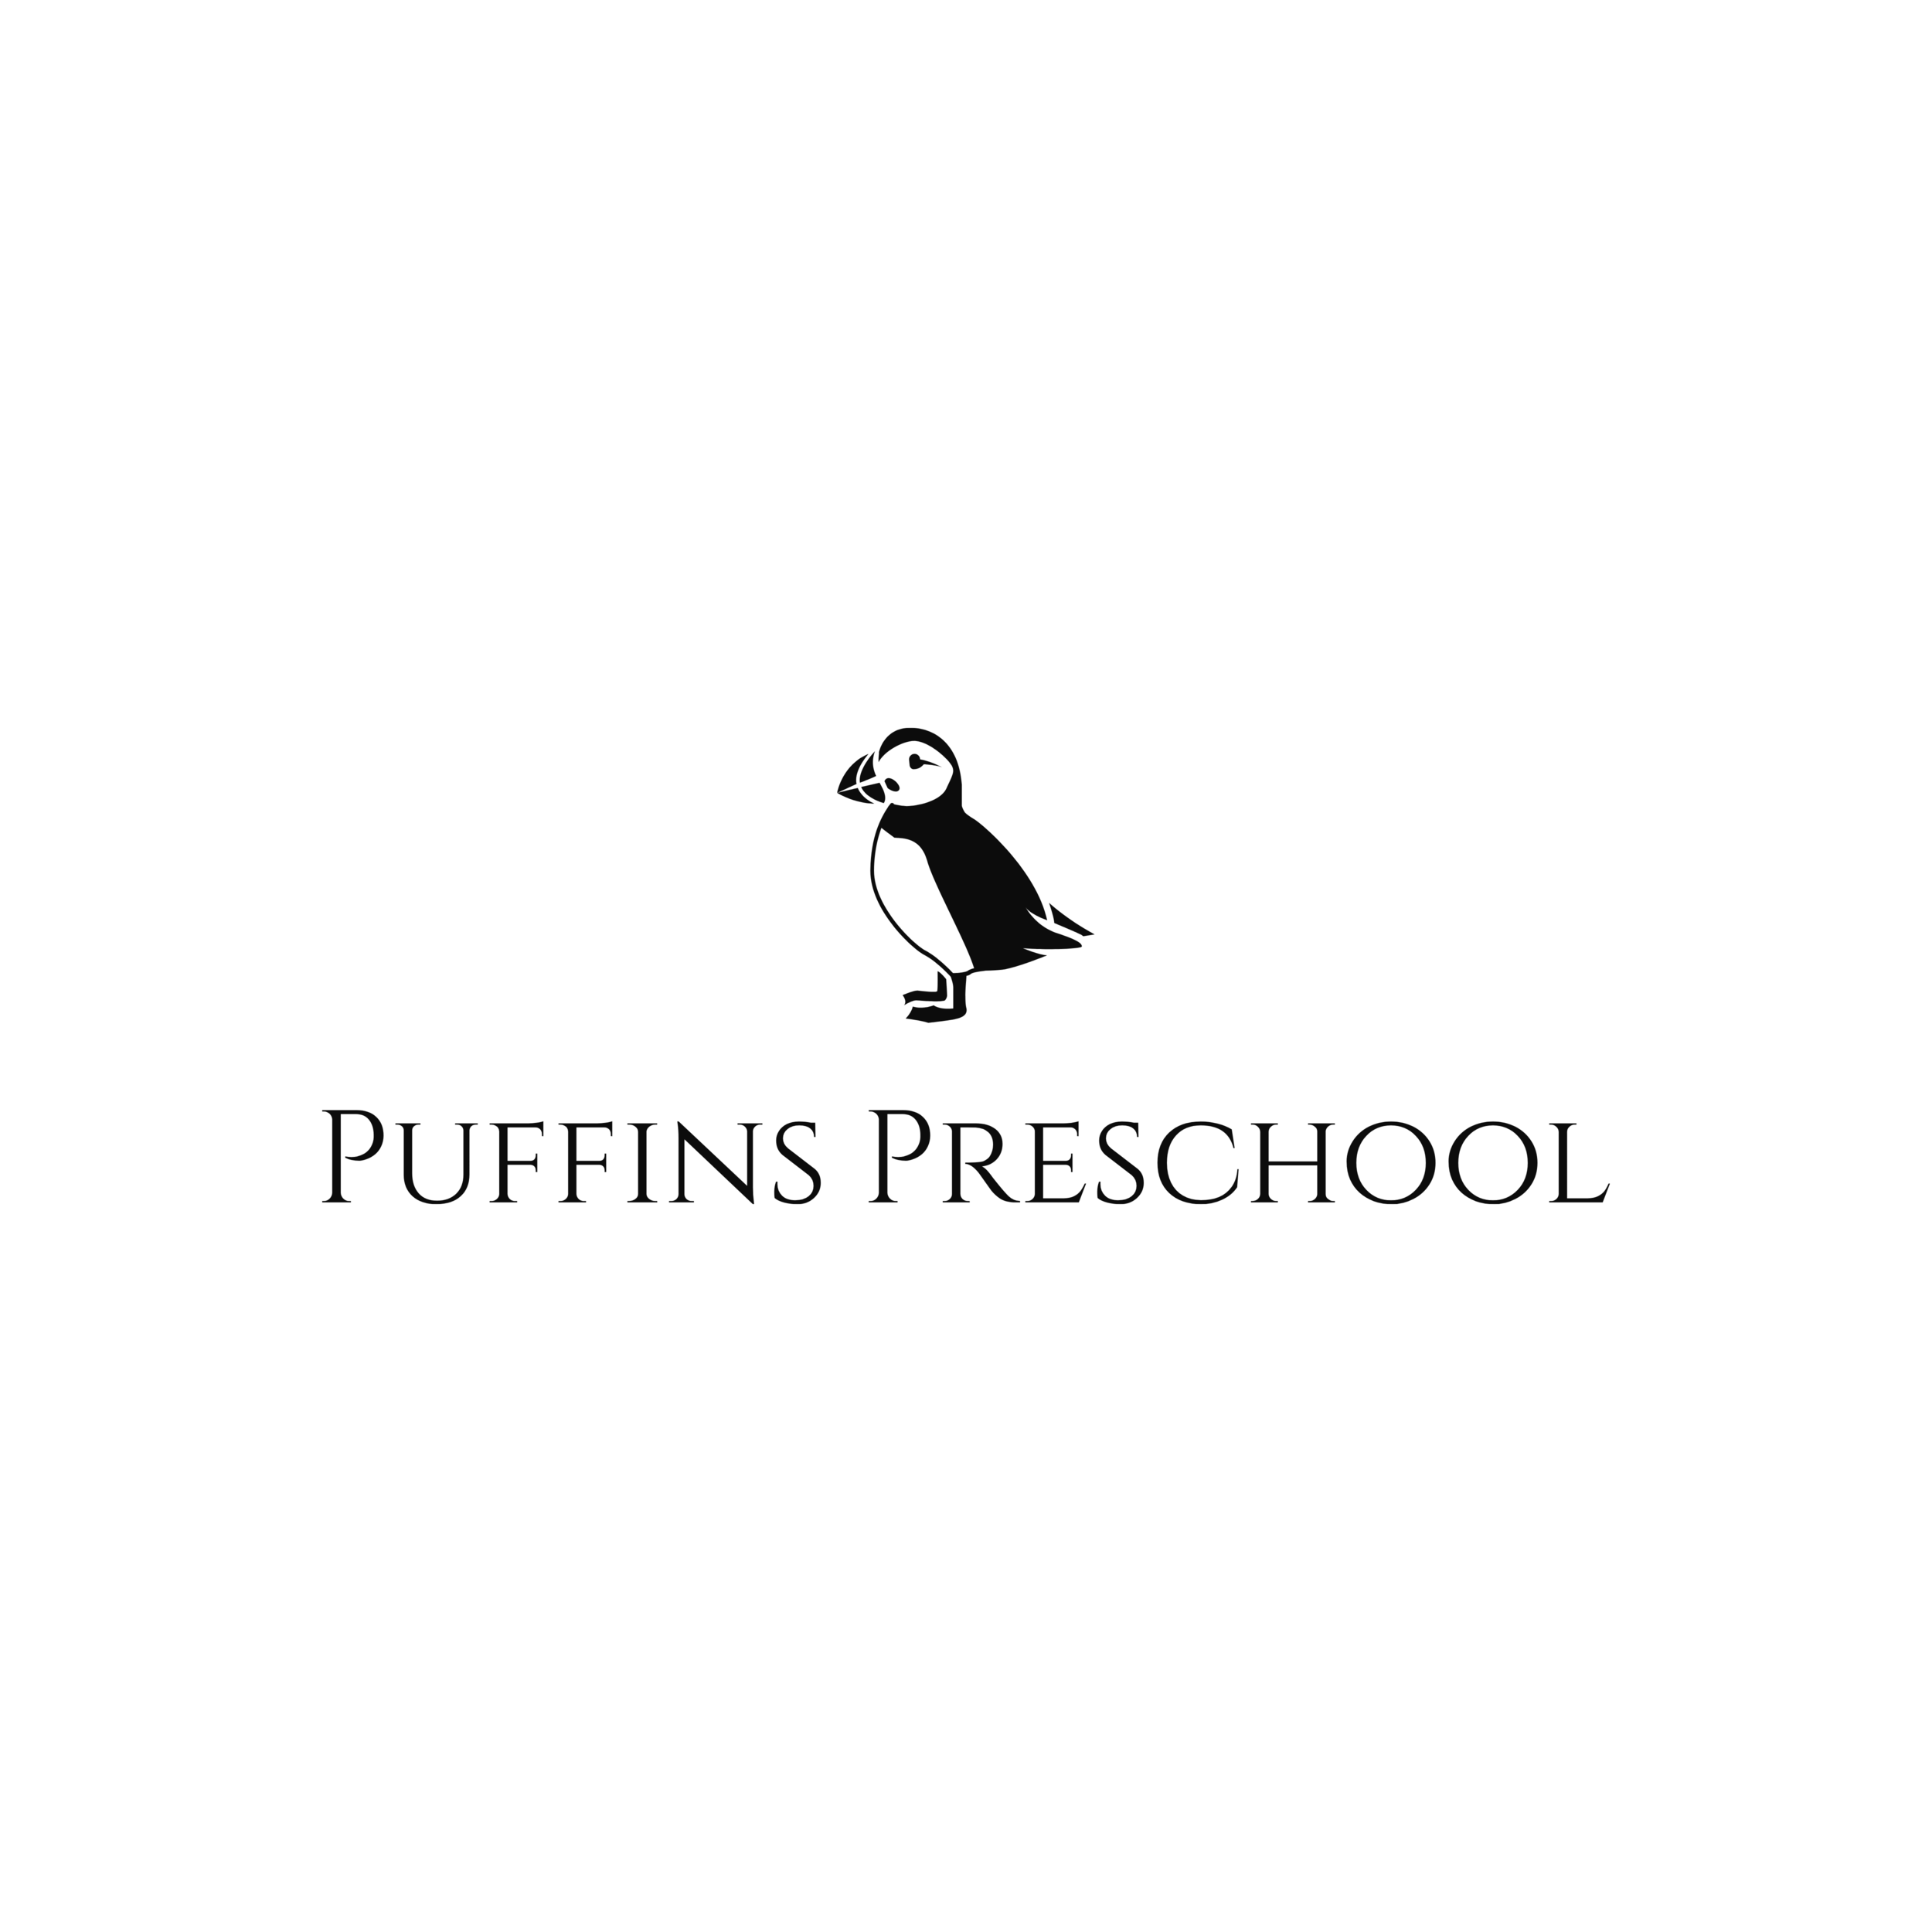 Puffins Preschool